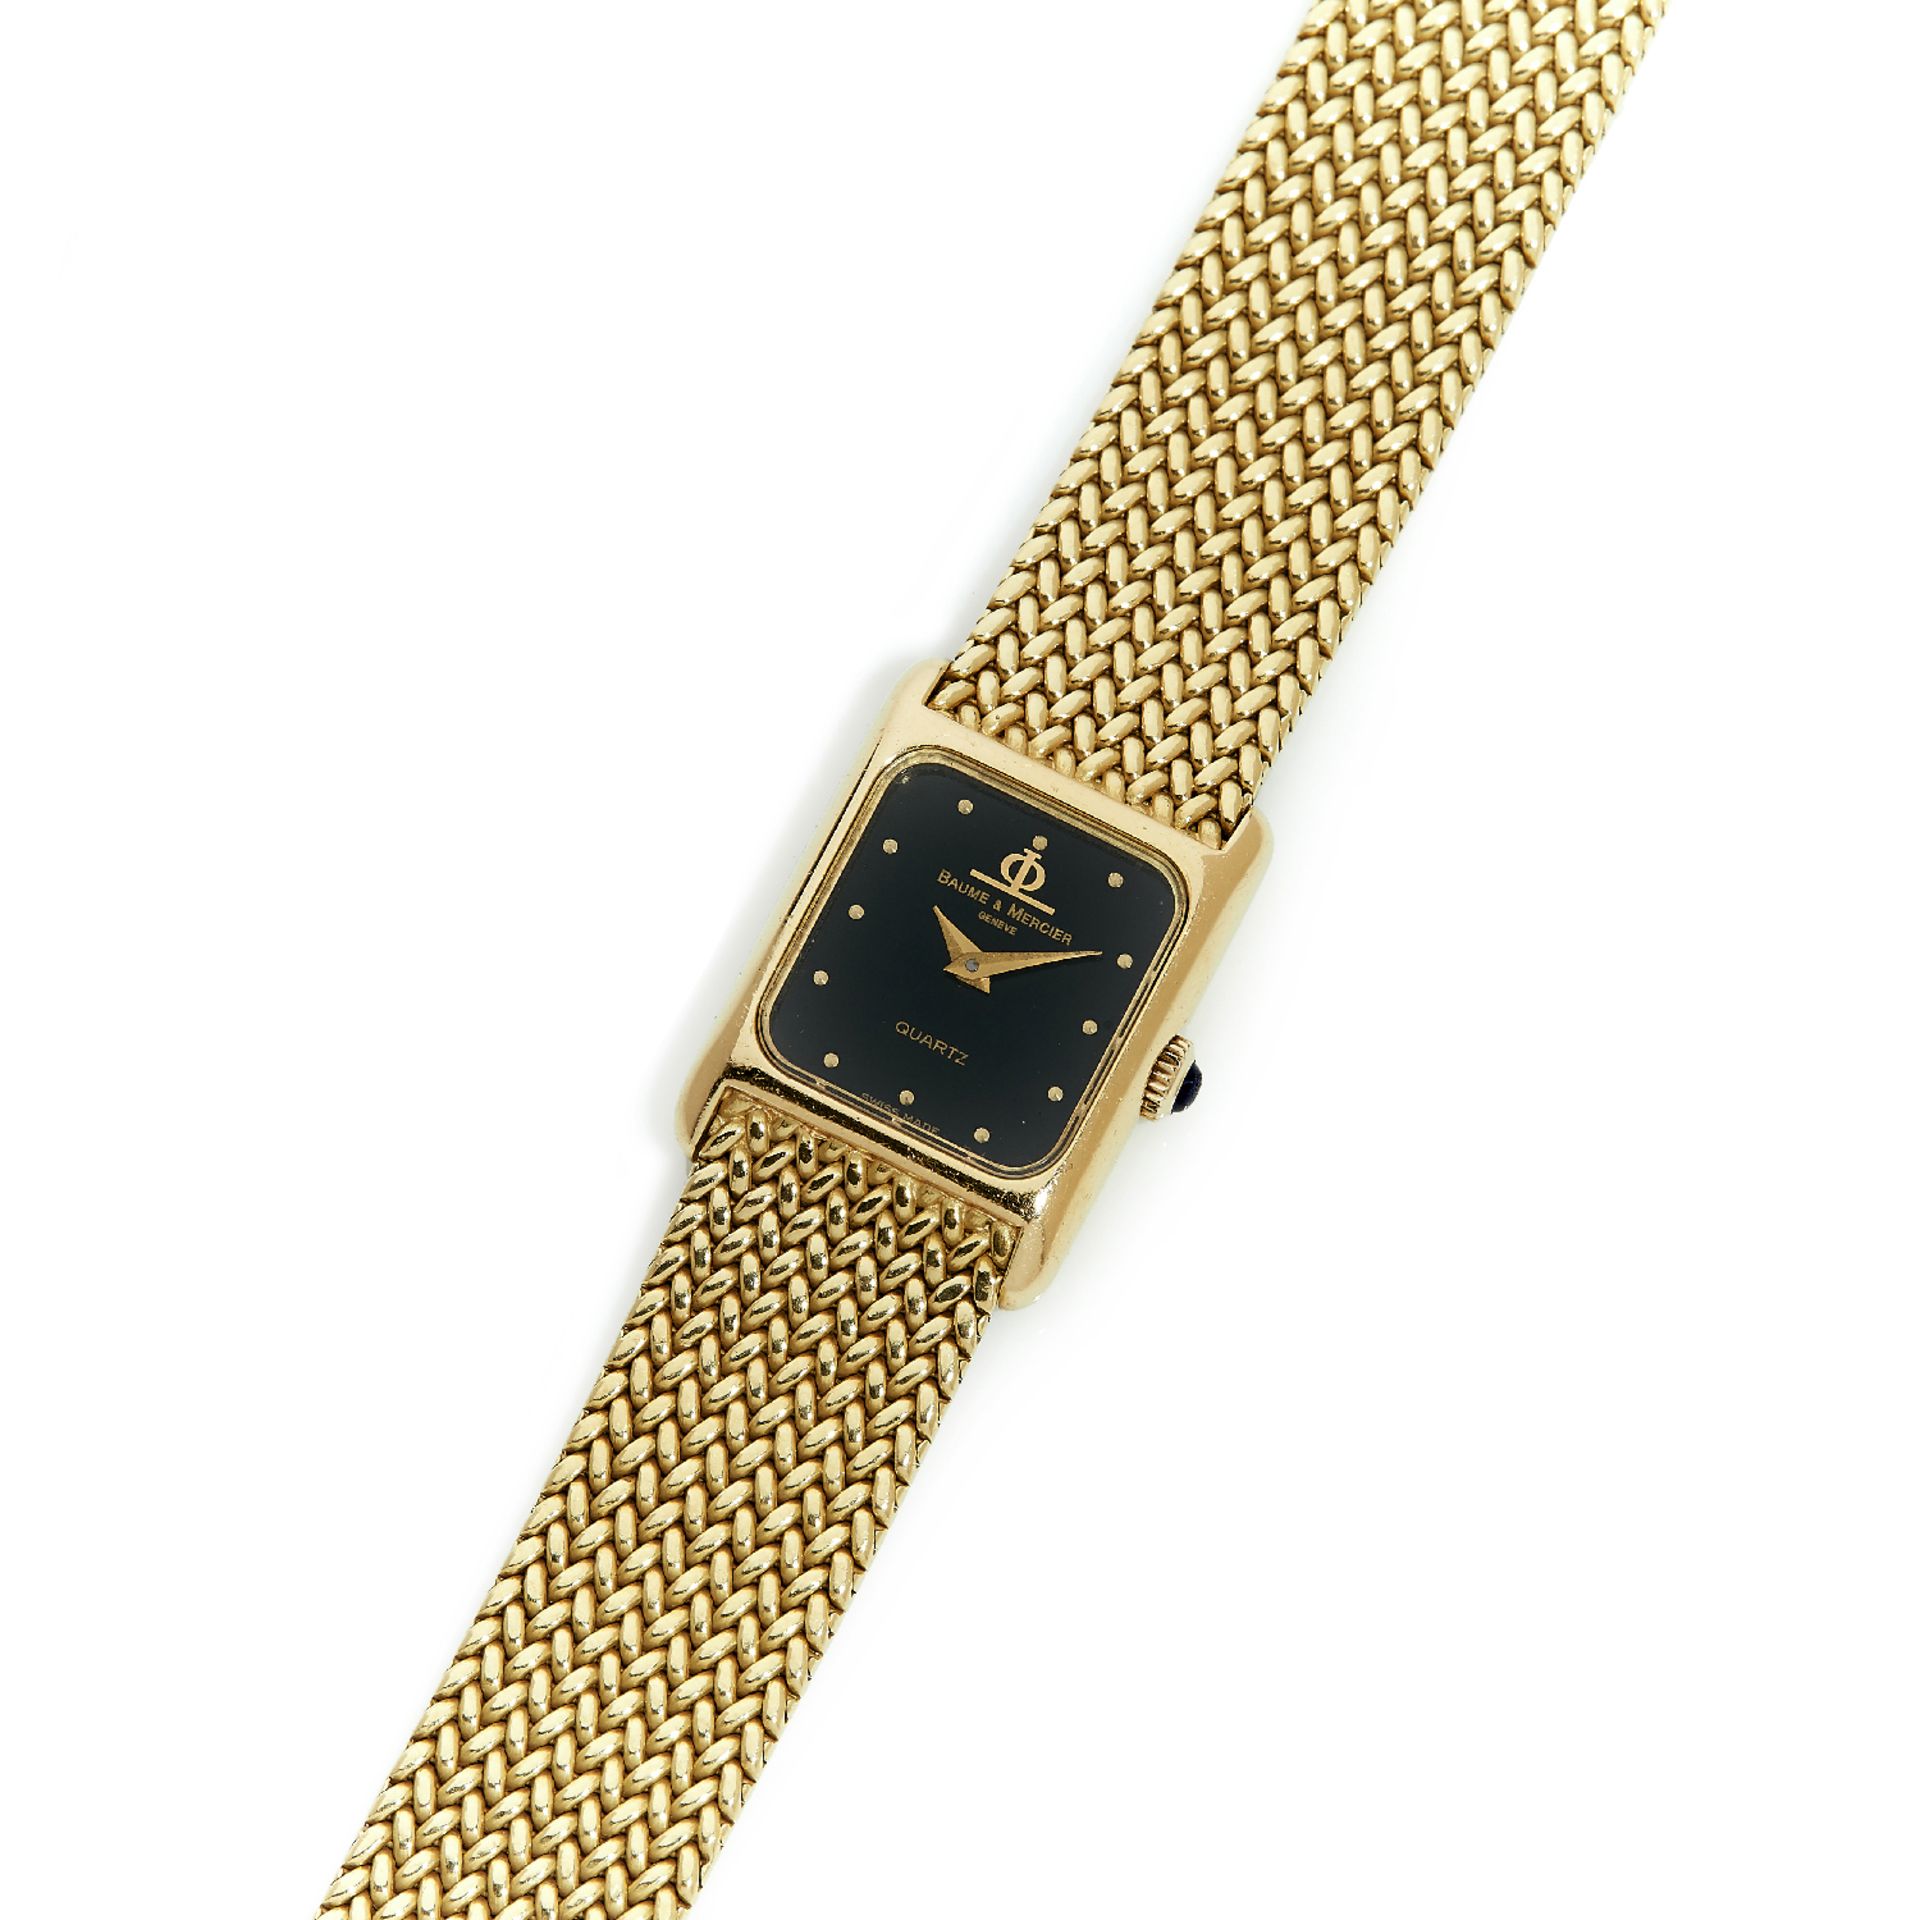 BAUME & MERCIER - Montre bracelet de dame en or jaune. - BOÎTIER : rectangulaire. [...]